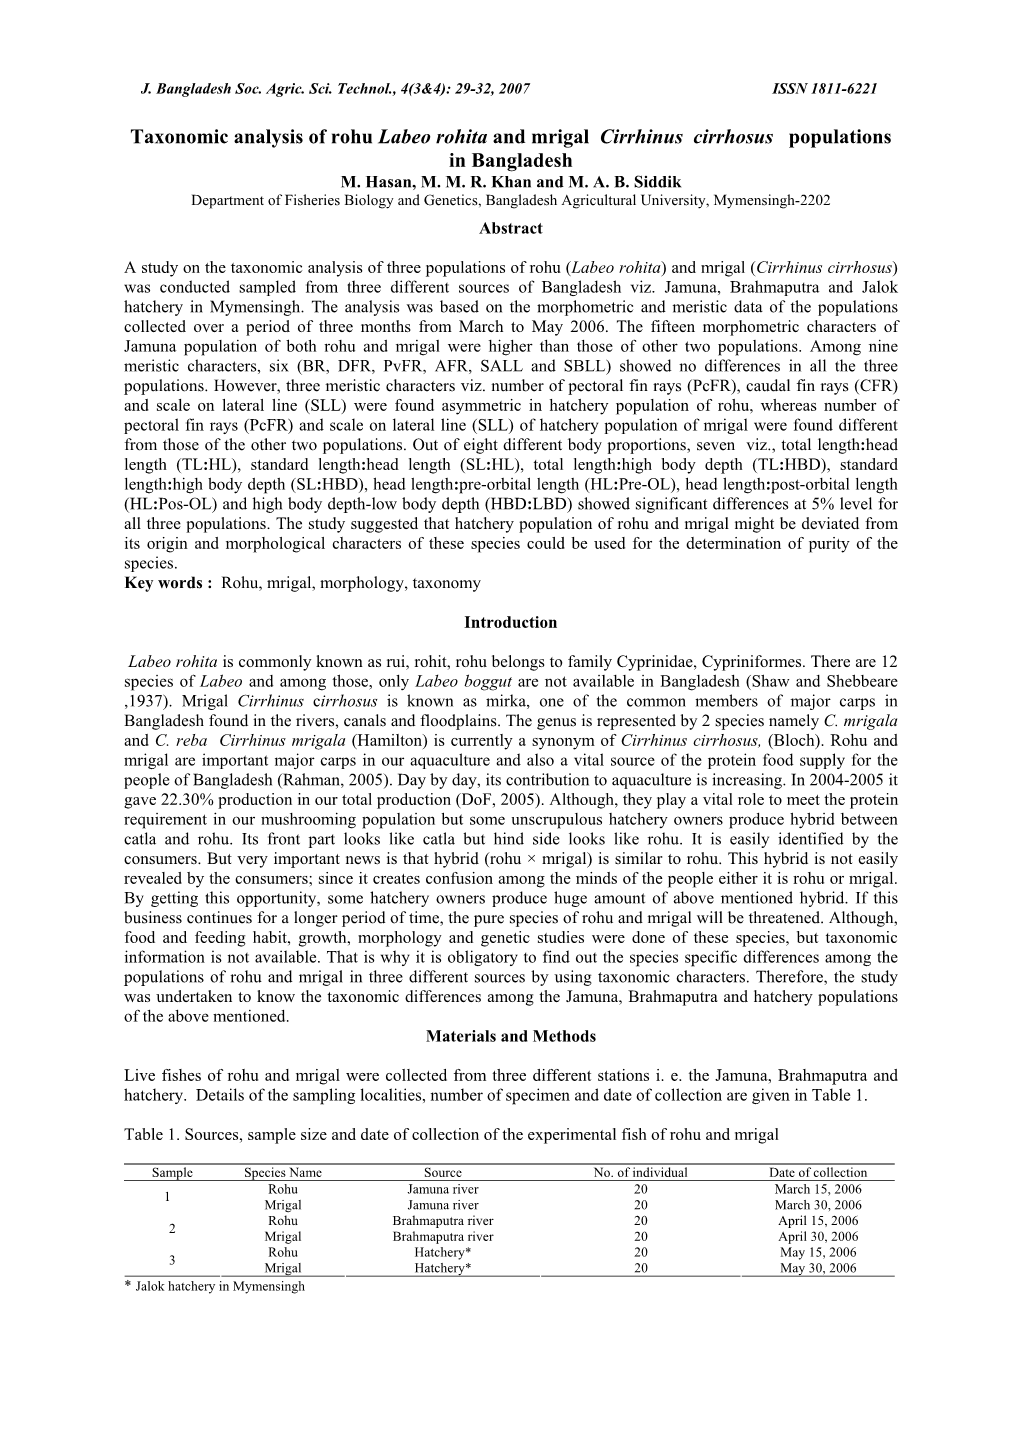 Taxonomic Analysis of Rohu Labeo Rohita and Mrigal Cirrhinus Cirrhosus Populations in Bangladesh M